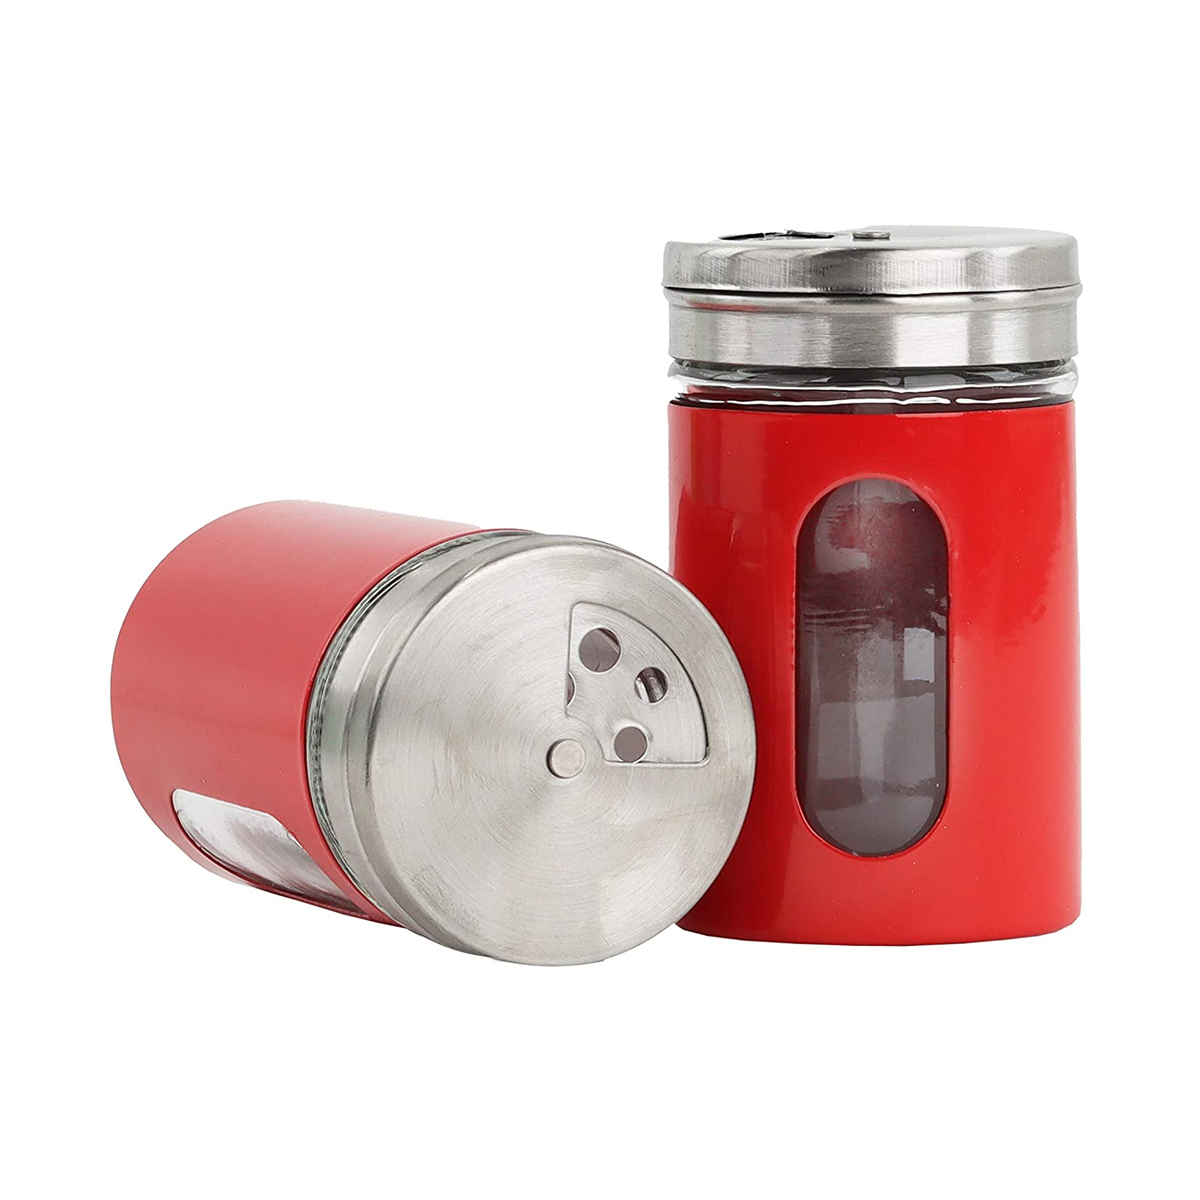 Red Salt Pepper Shakers Retro Spice Jars Glass - Set of 2